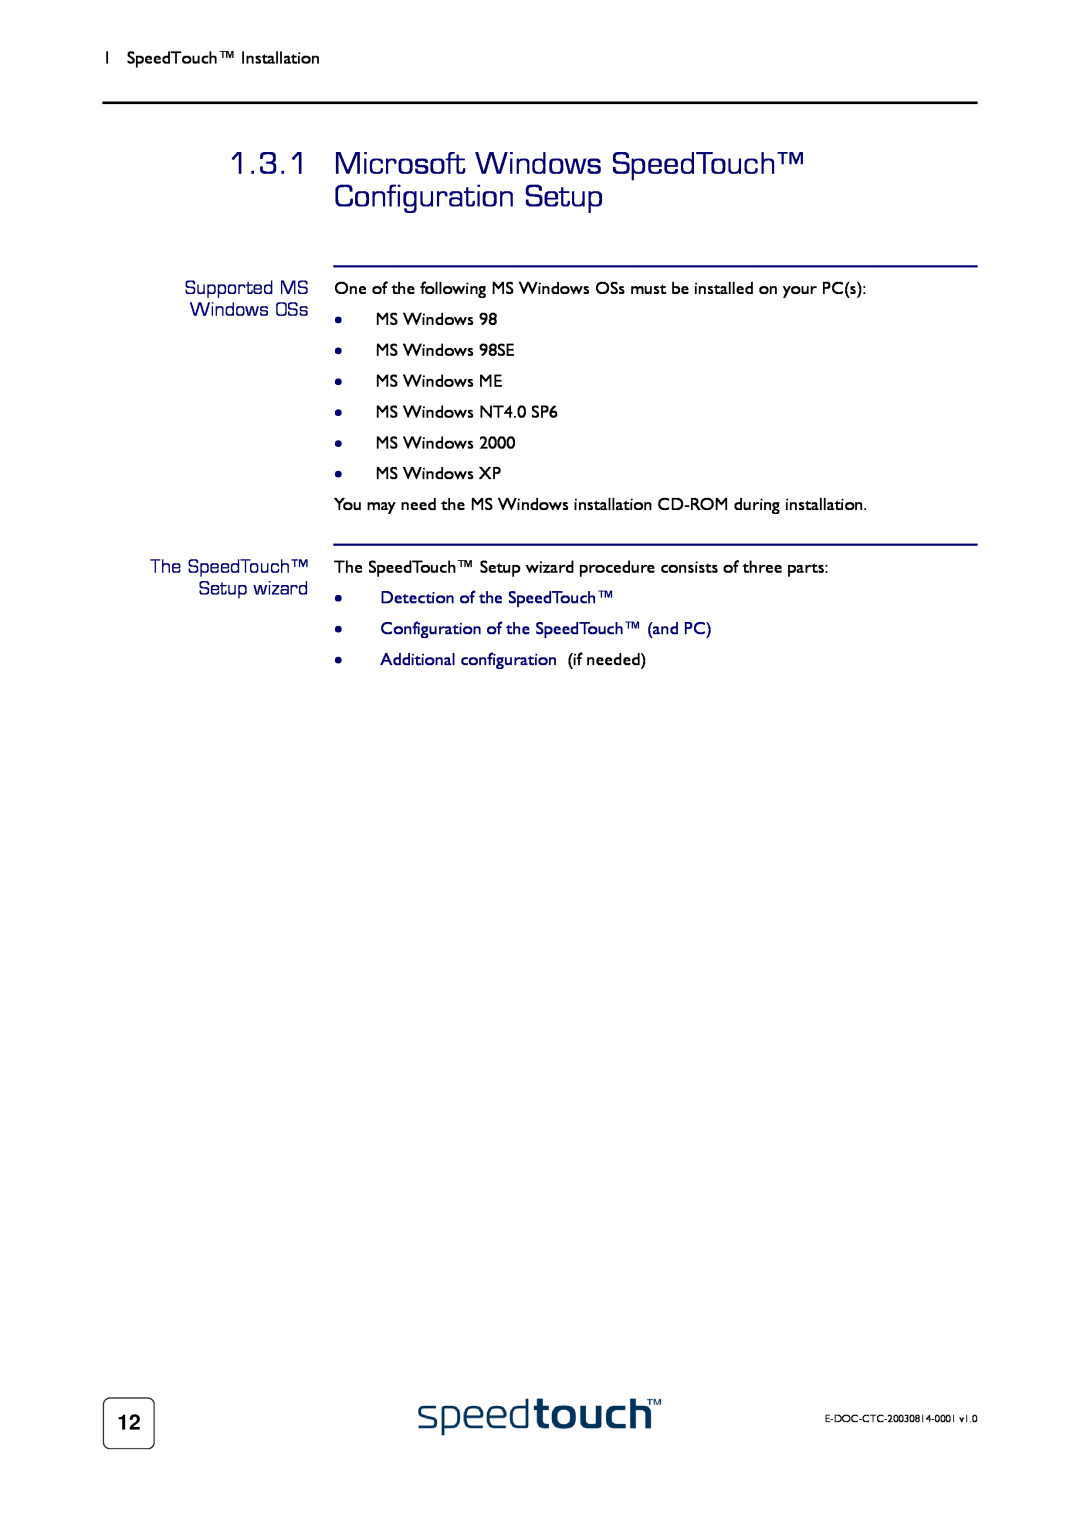 Technicolor - Thomson 545/570 manual Microsoft Windows SpeedTouch Configuration Setup, Supported MS Windows OSs 